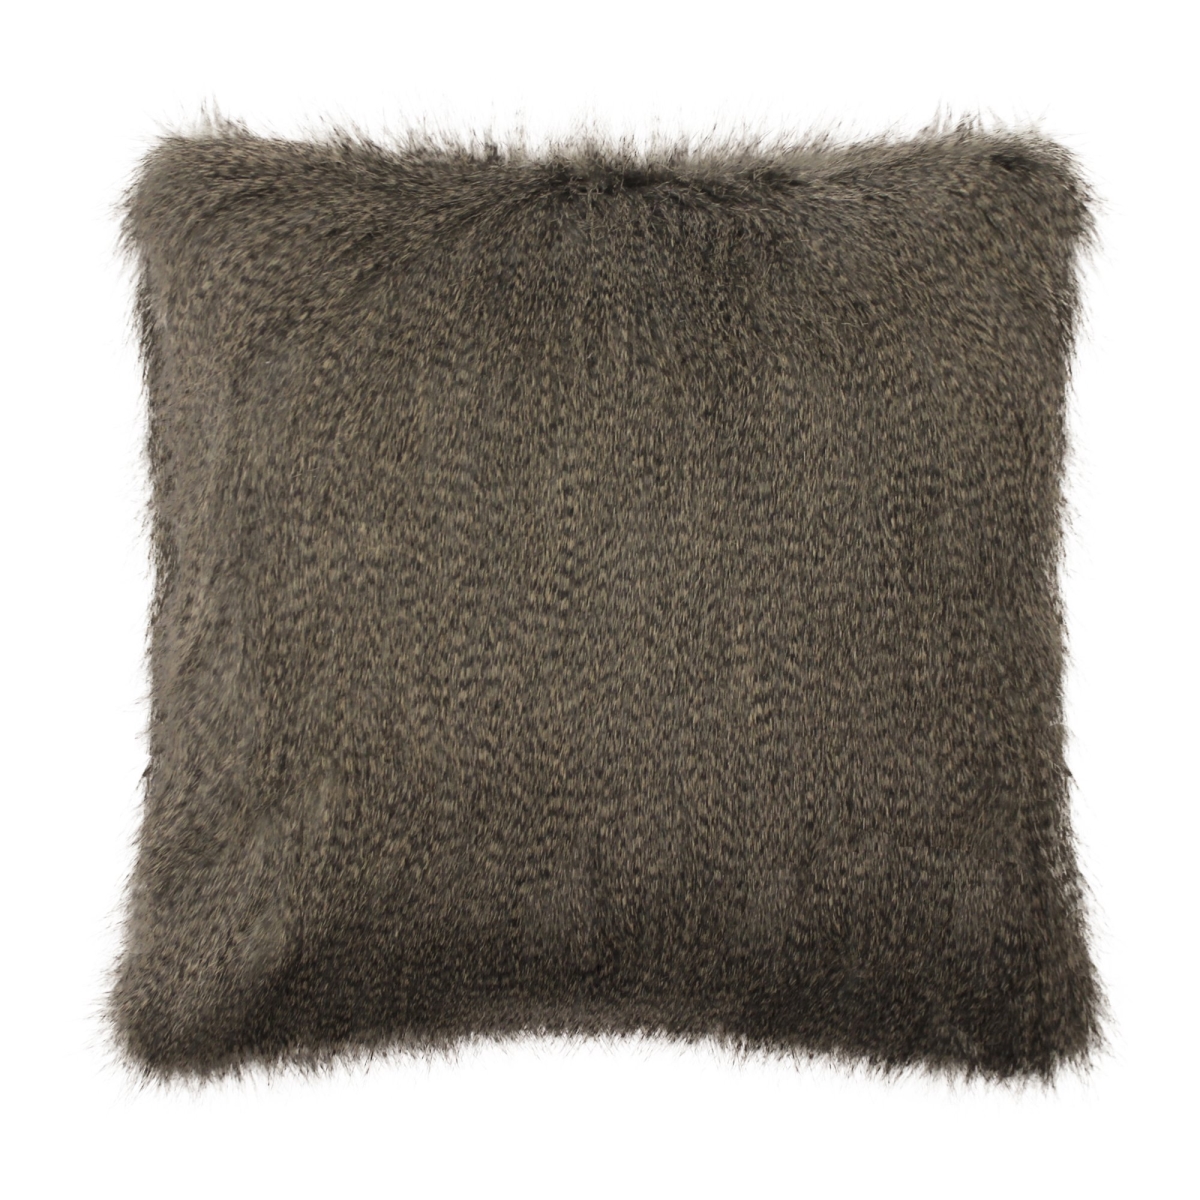 Sq-pi-sgbff-1818 18 X 18 In. Swallow B Faux Fur Decorative Cushion, Grey - 100 Percent Polyester